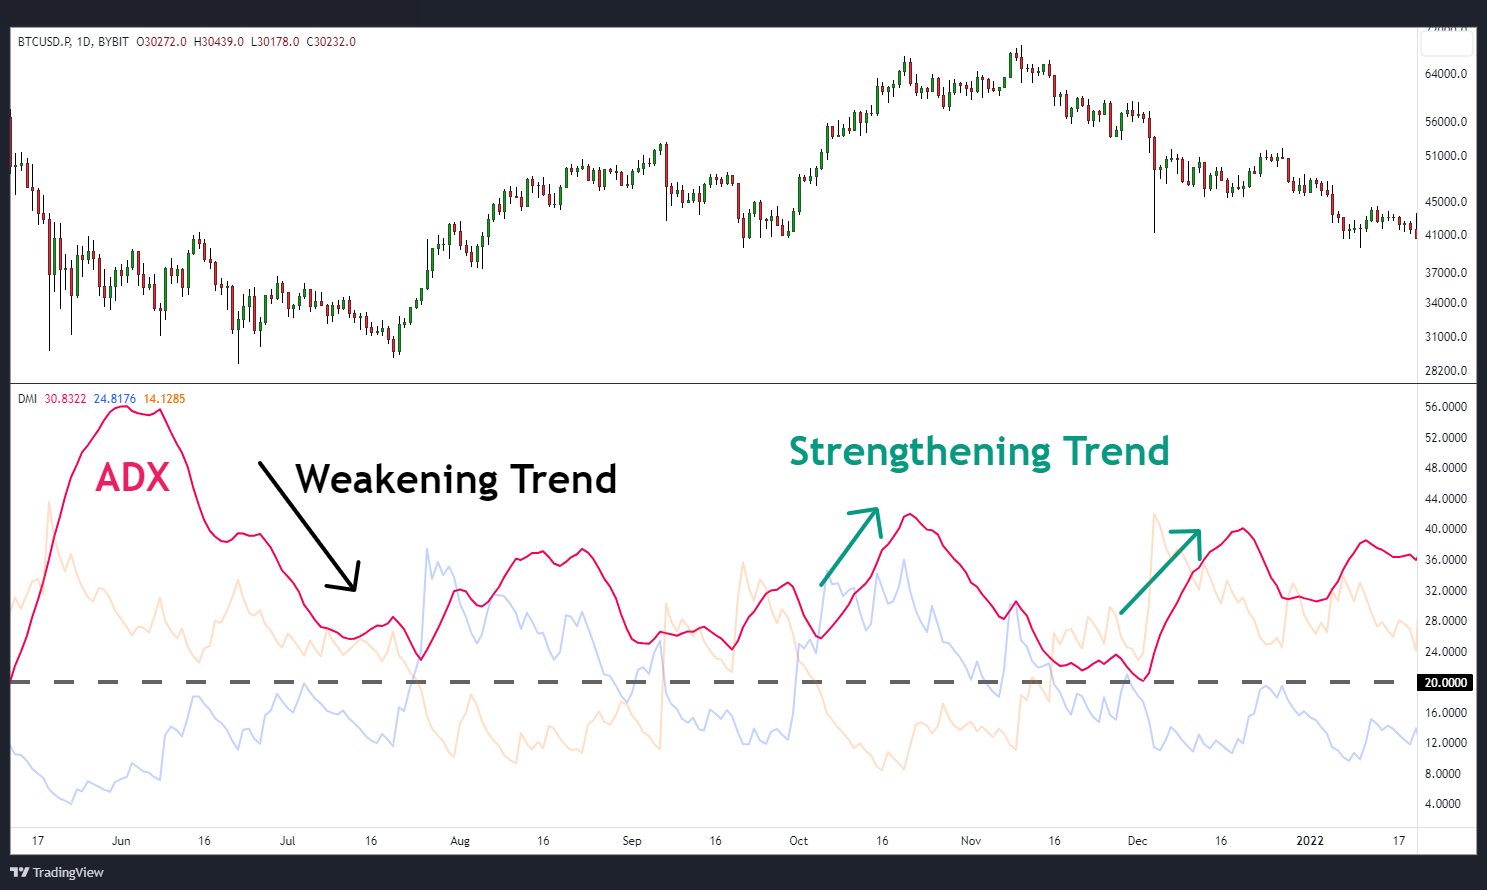 Average Directional Index (ADX) in weakening trend and strengthening trend.